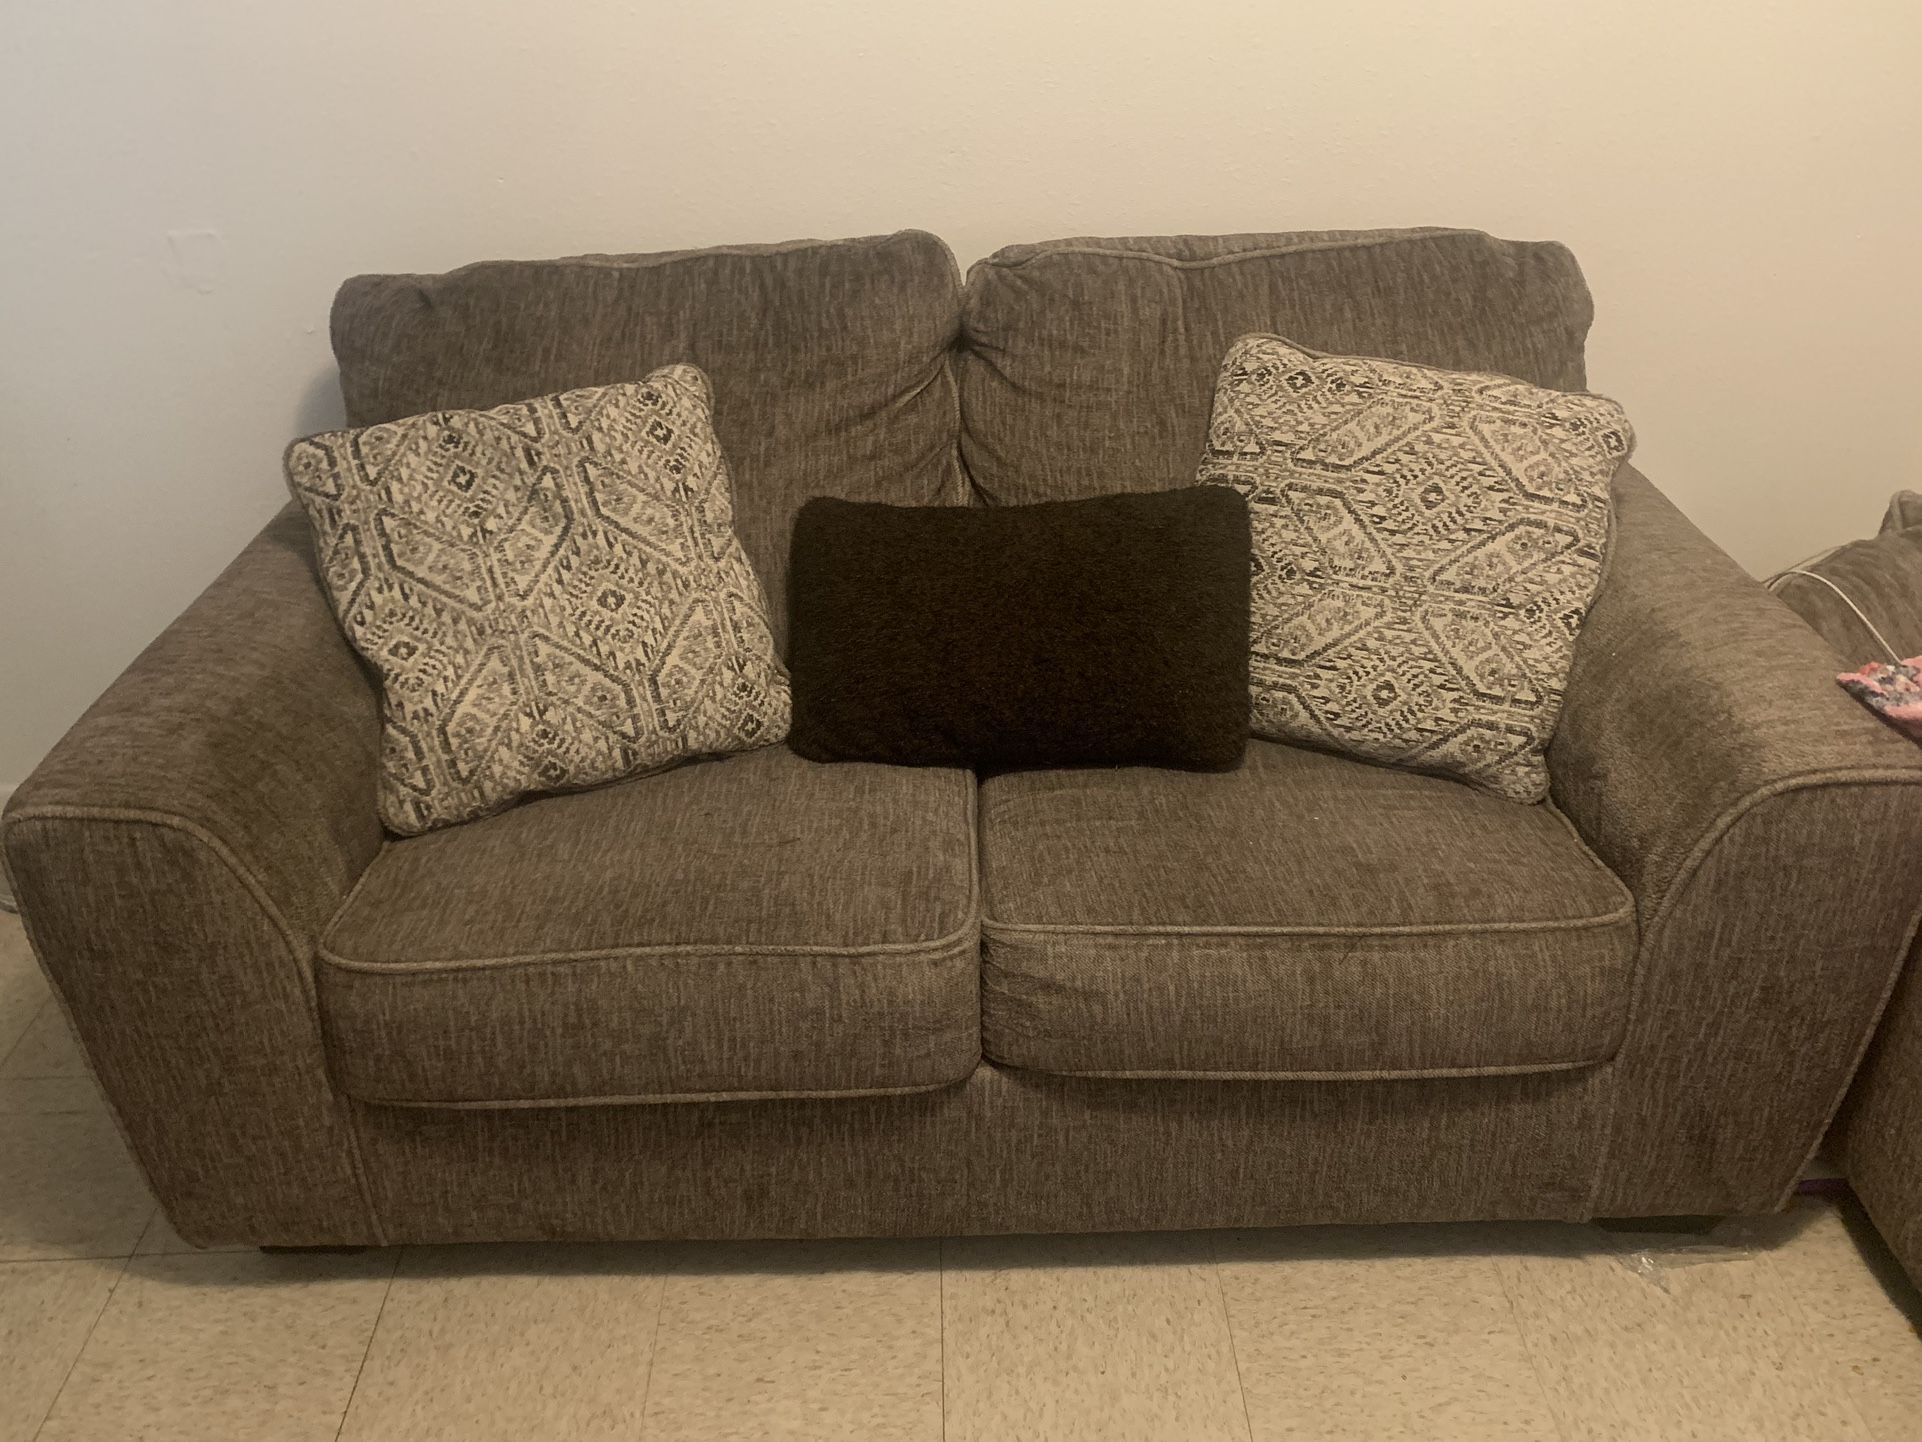 Simgle Sofa Great Condition 